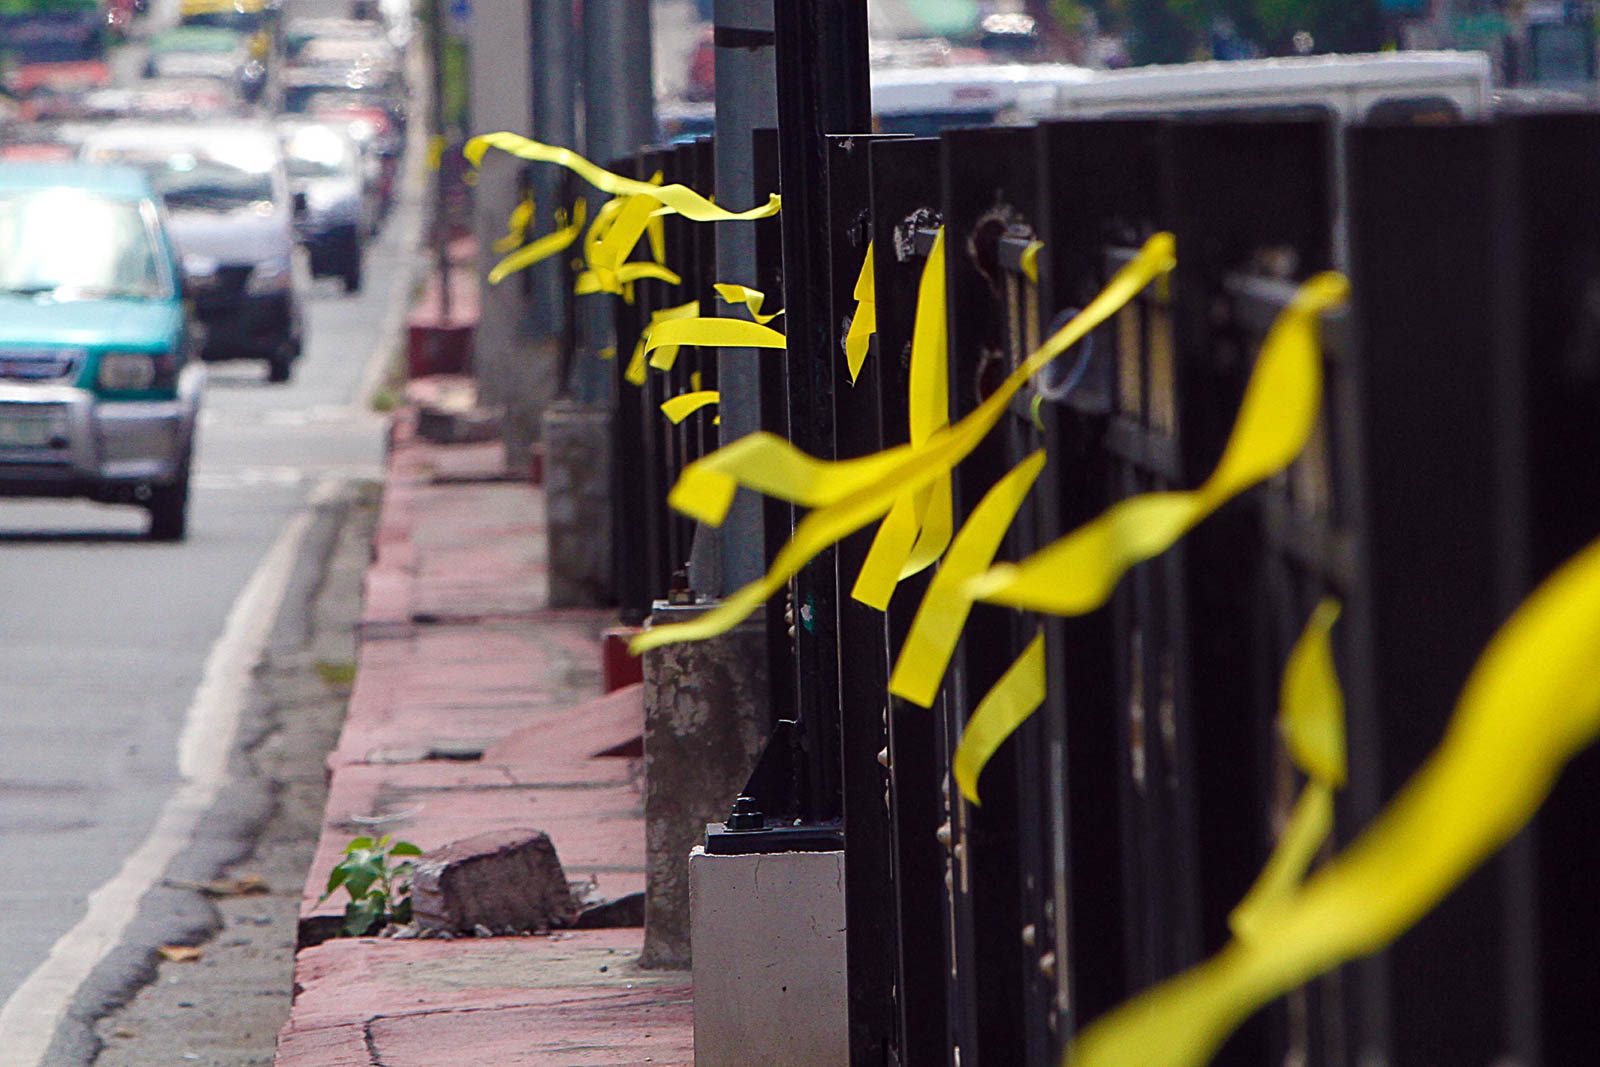 IN PHOTOS: Yellow lighting, ribbons found across PH in honor of Noynoy Aquino